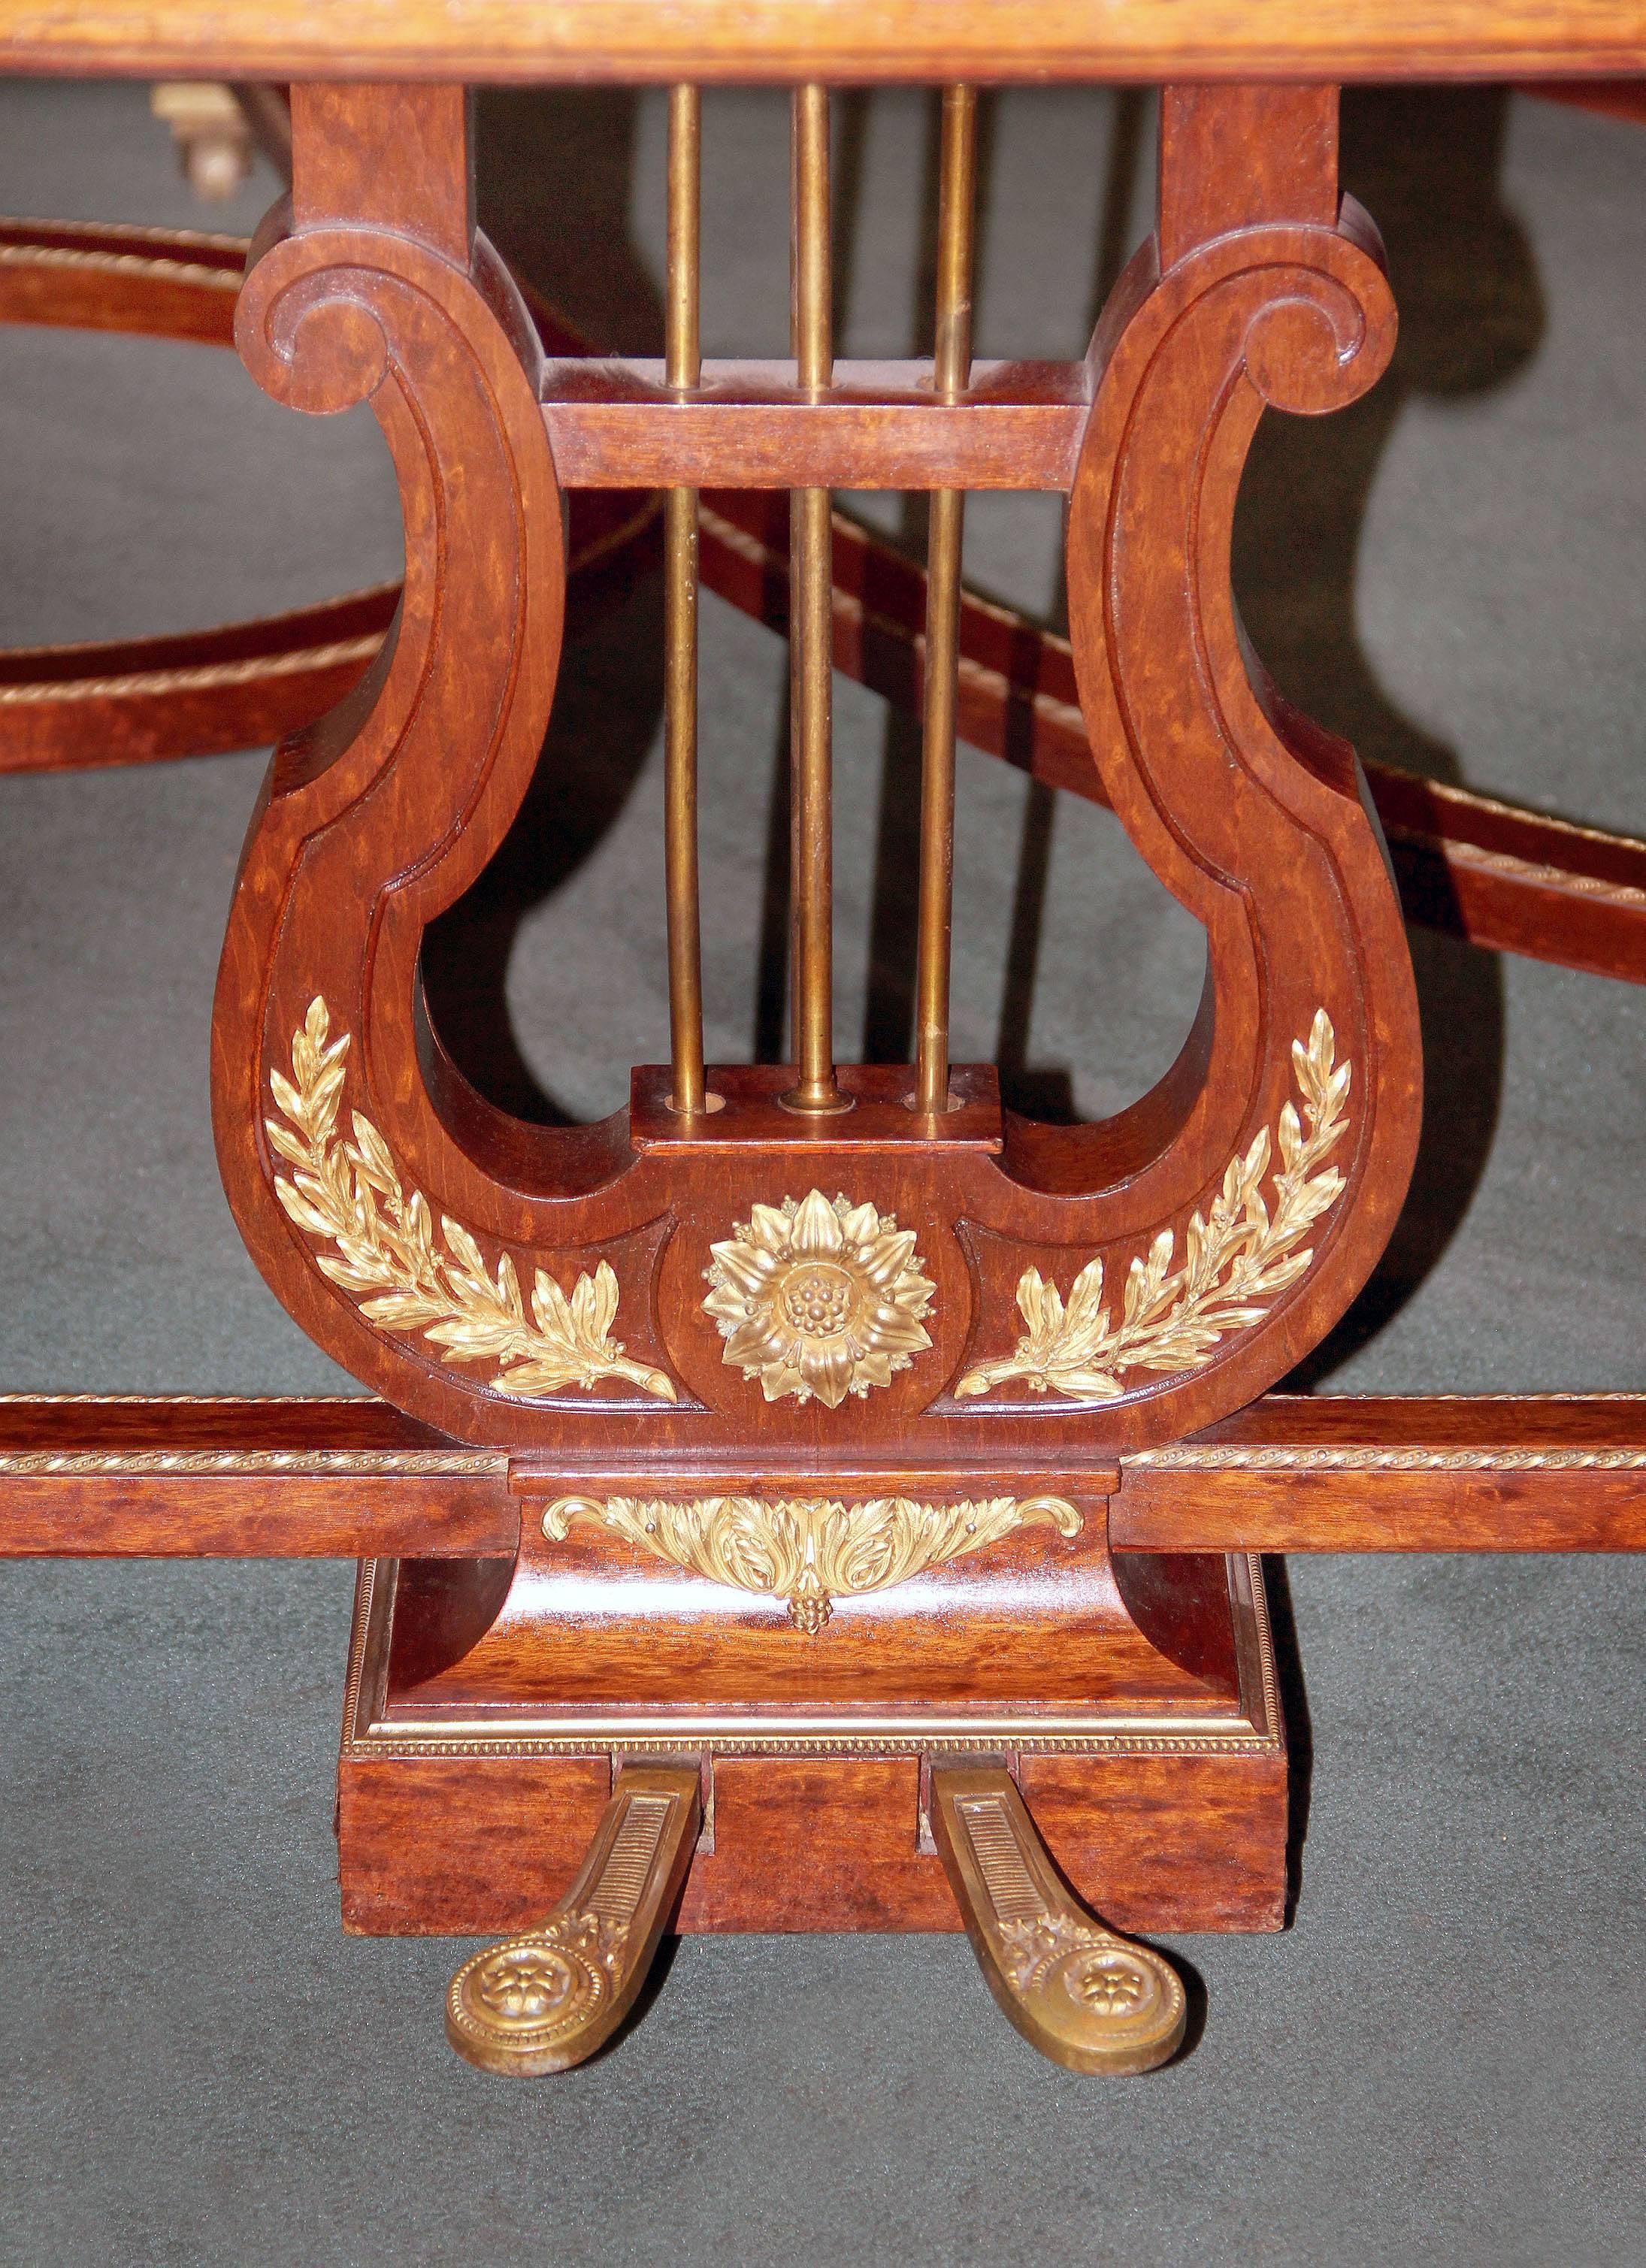 Early 20th Century Wonderful Turn-of-the-Century Gilt Bronze-Mounted Grand Erard Piano